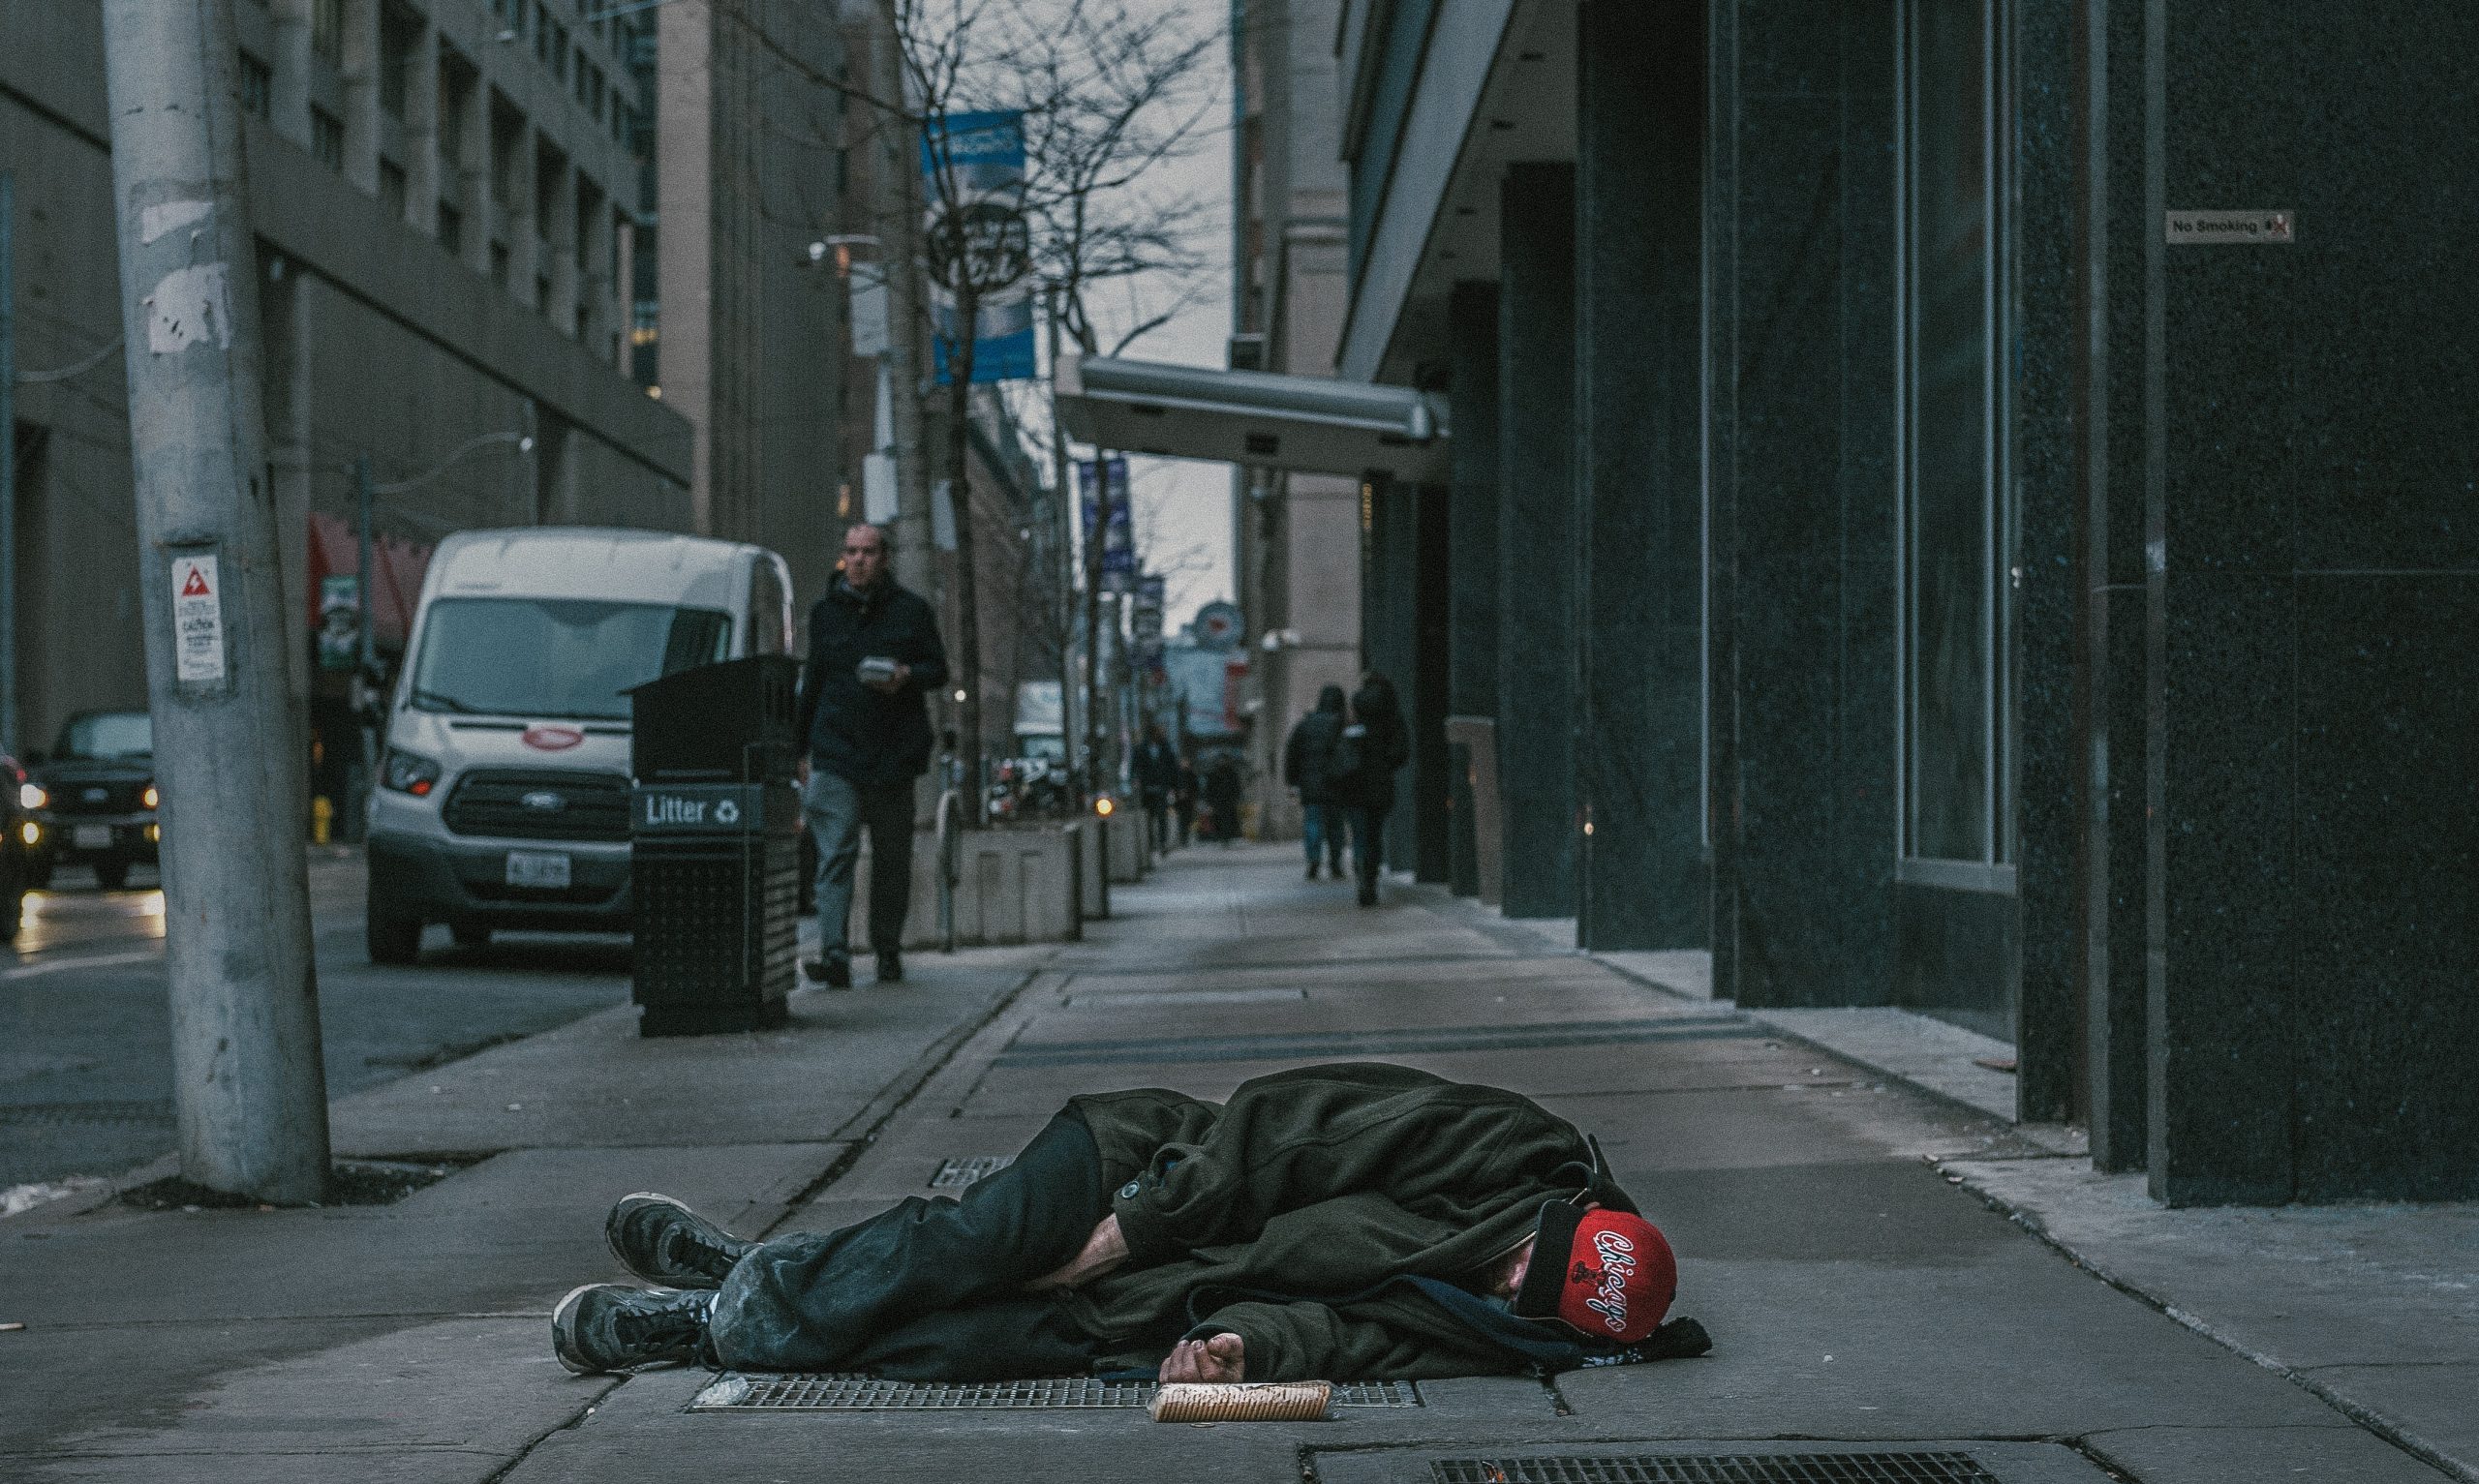 Homeless person sleeping on the sidewalk.